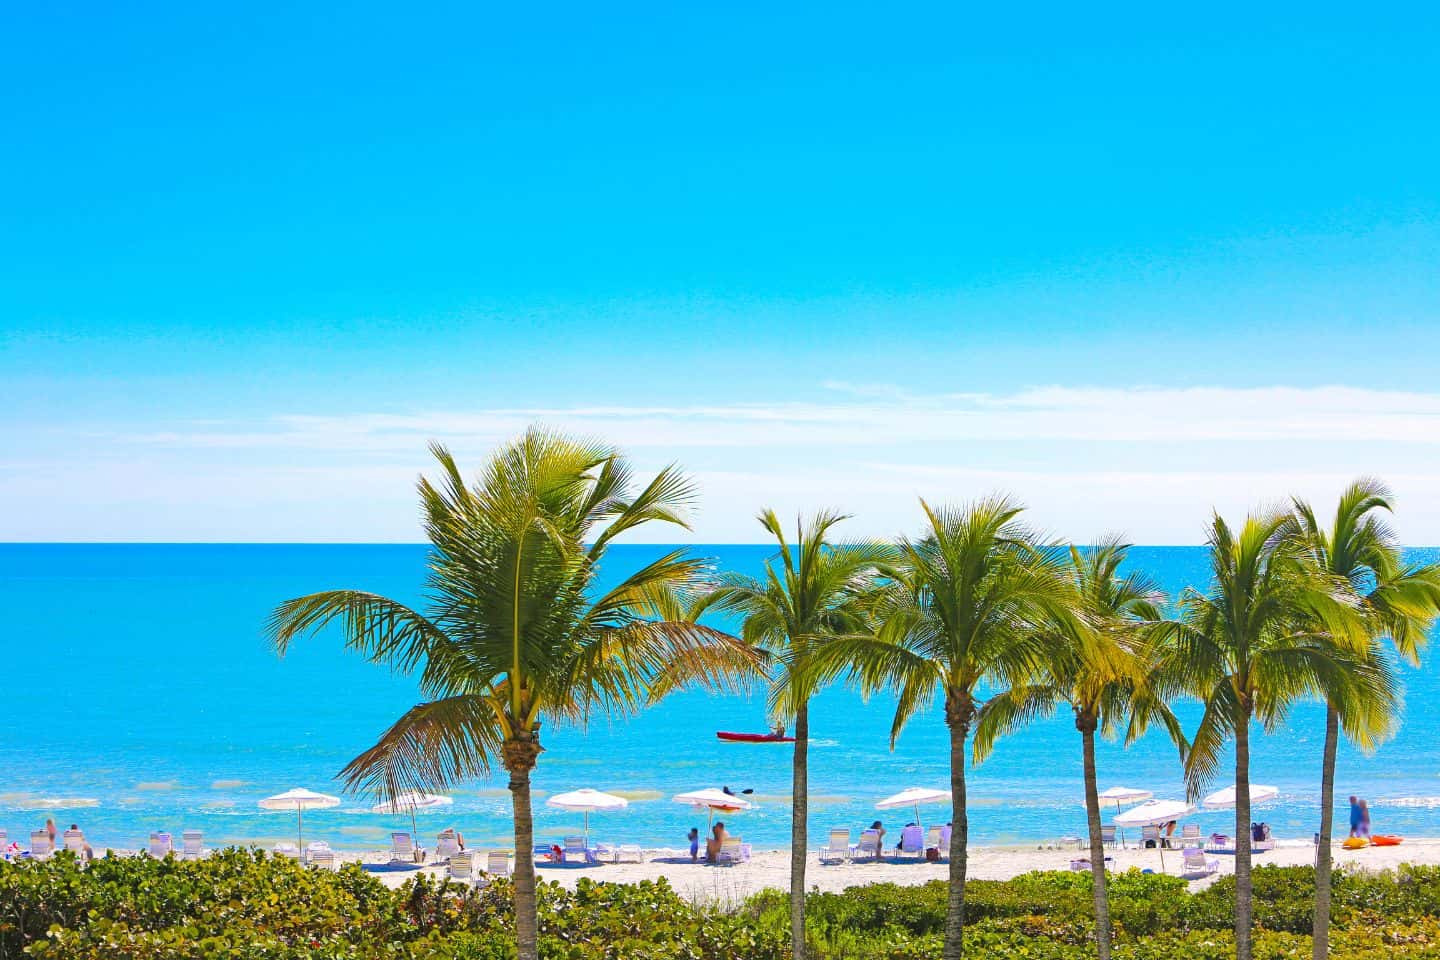 Palm trees lining sandy beach with sun umbrellas